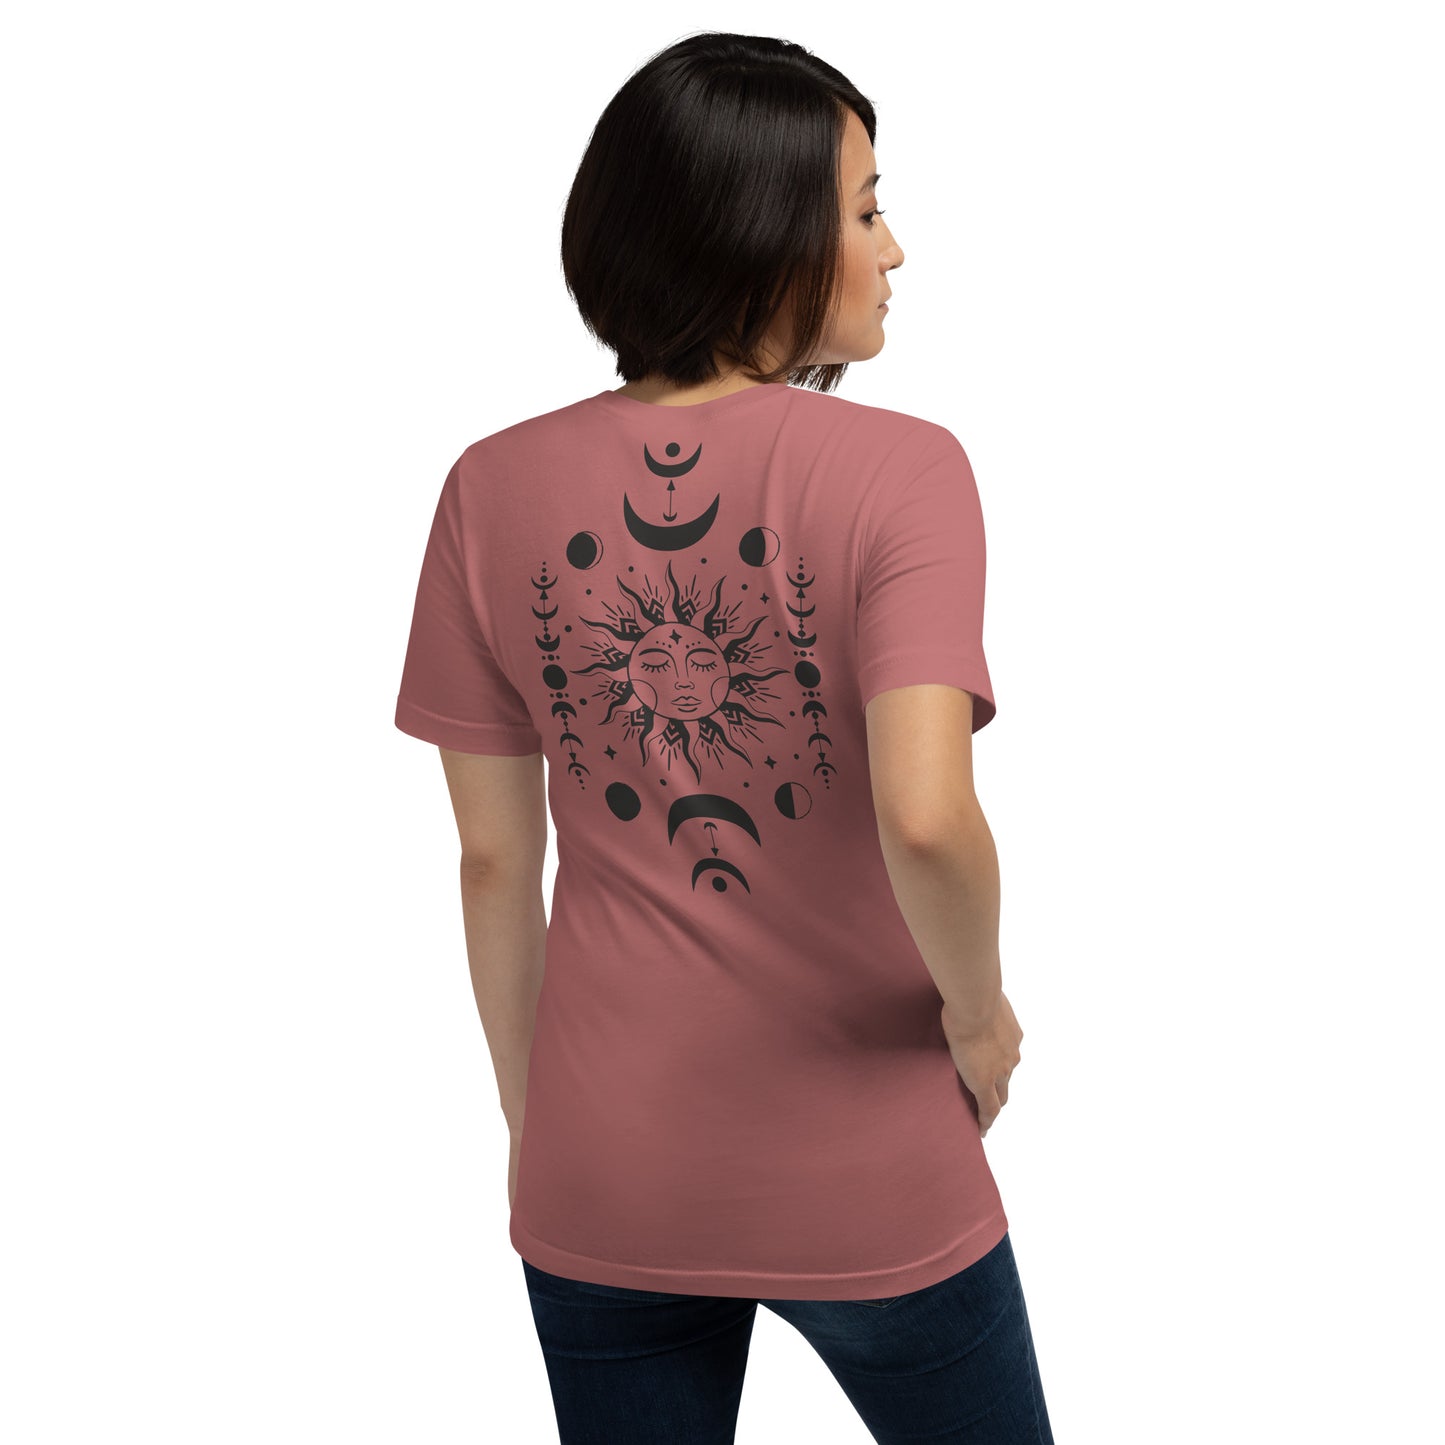 Unisex sun and moon t-shirt